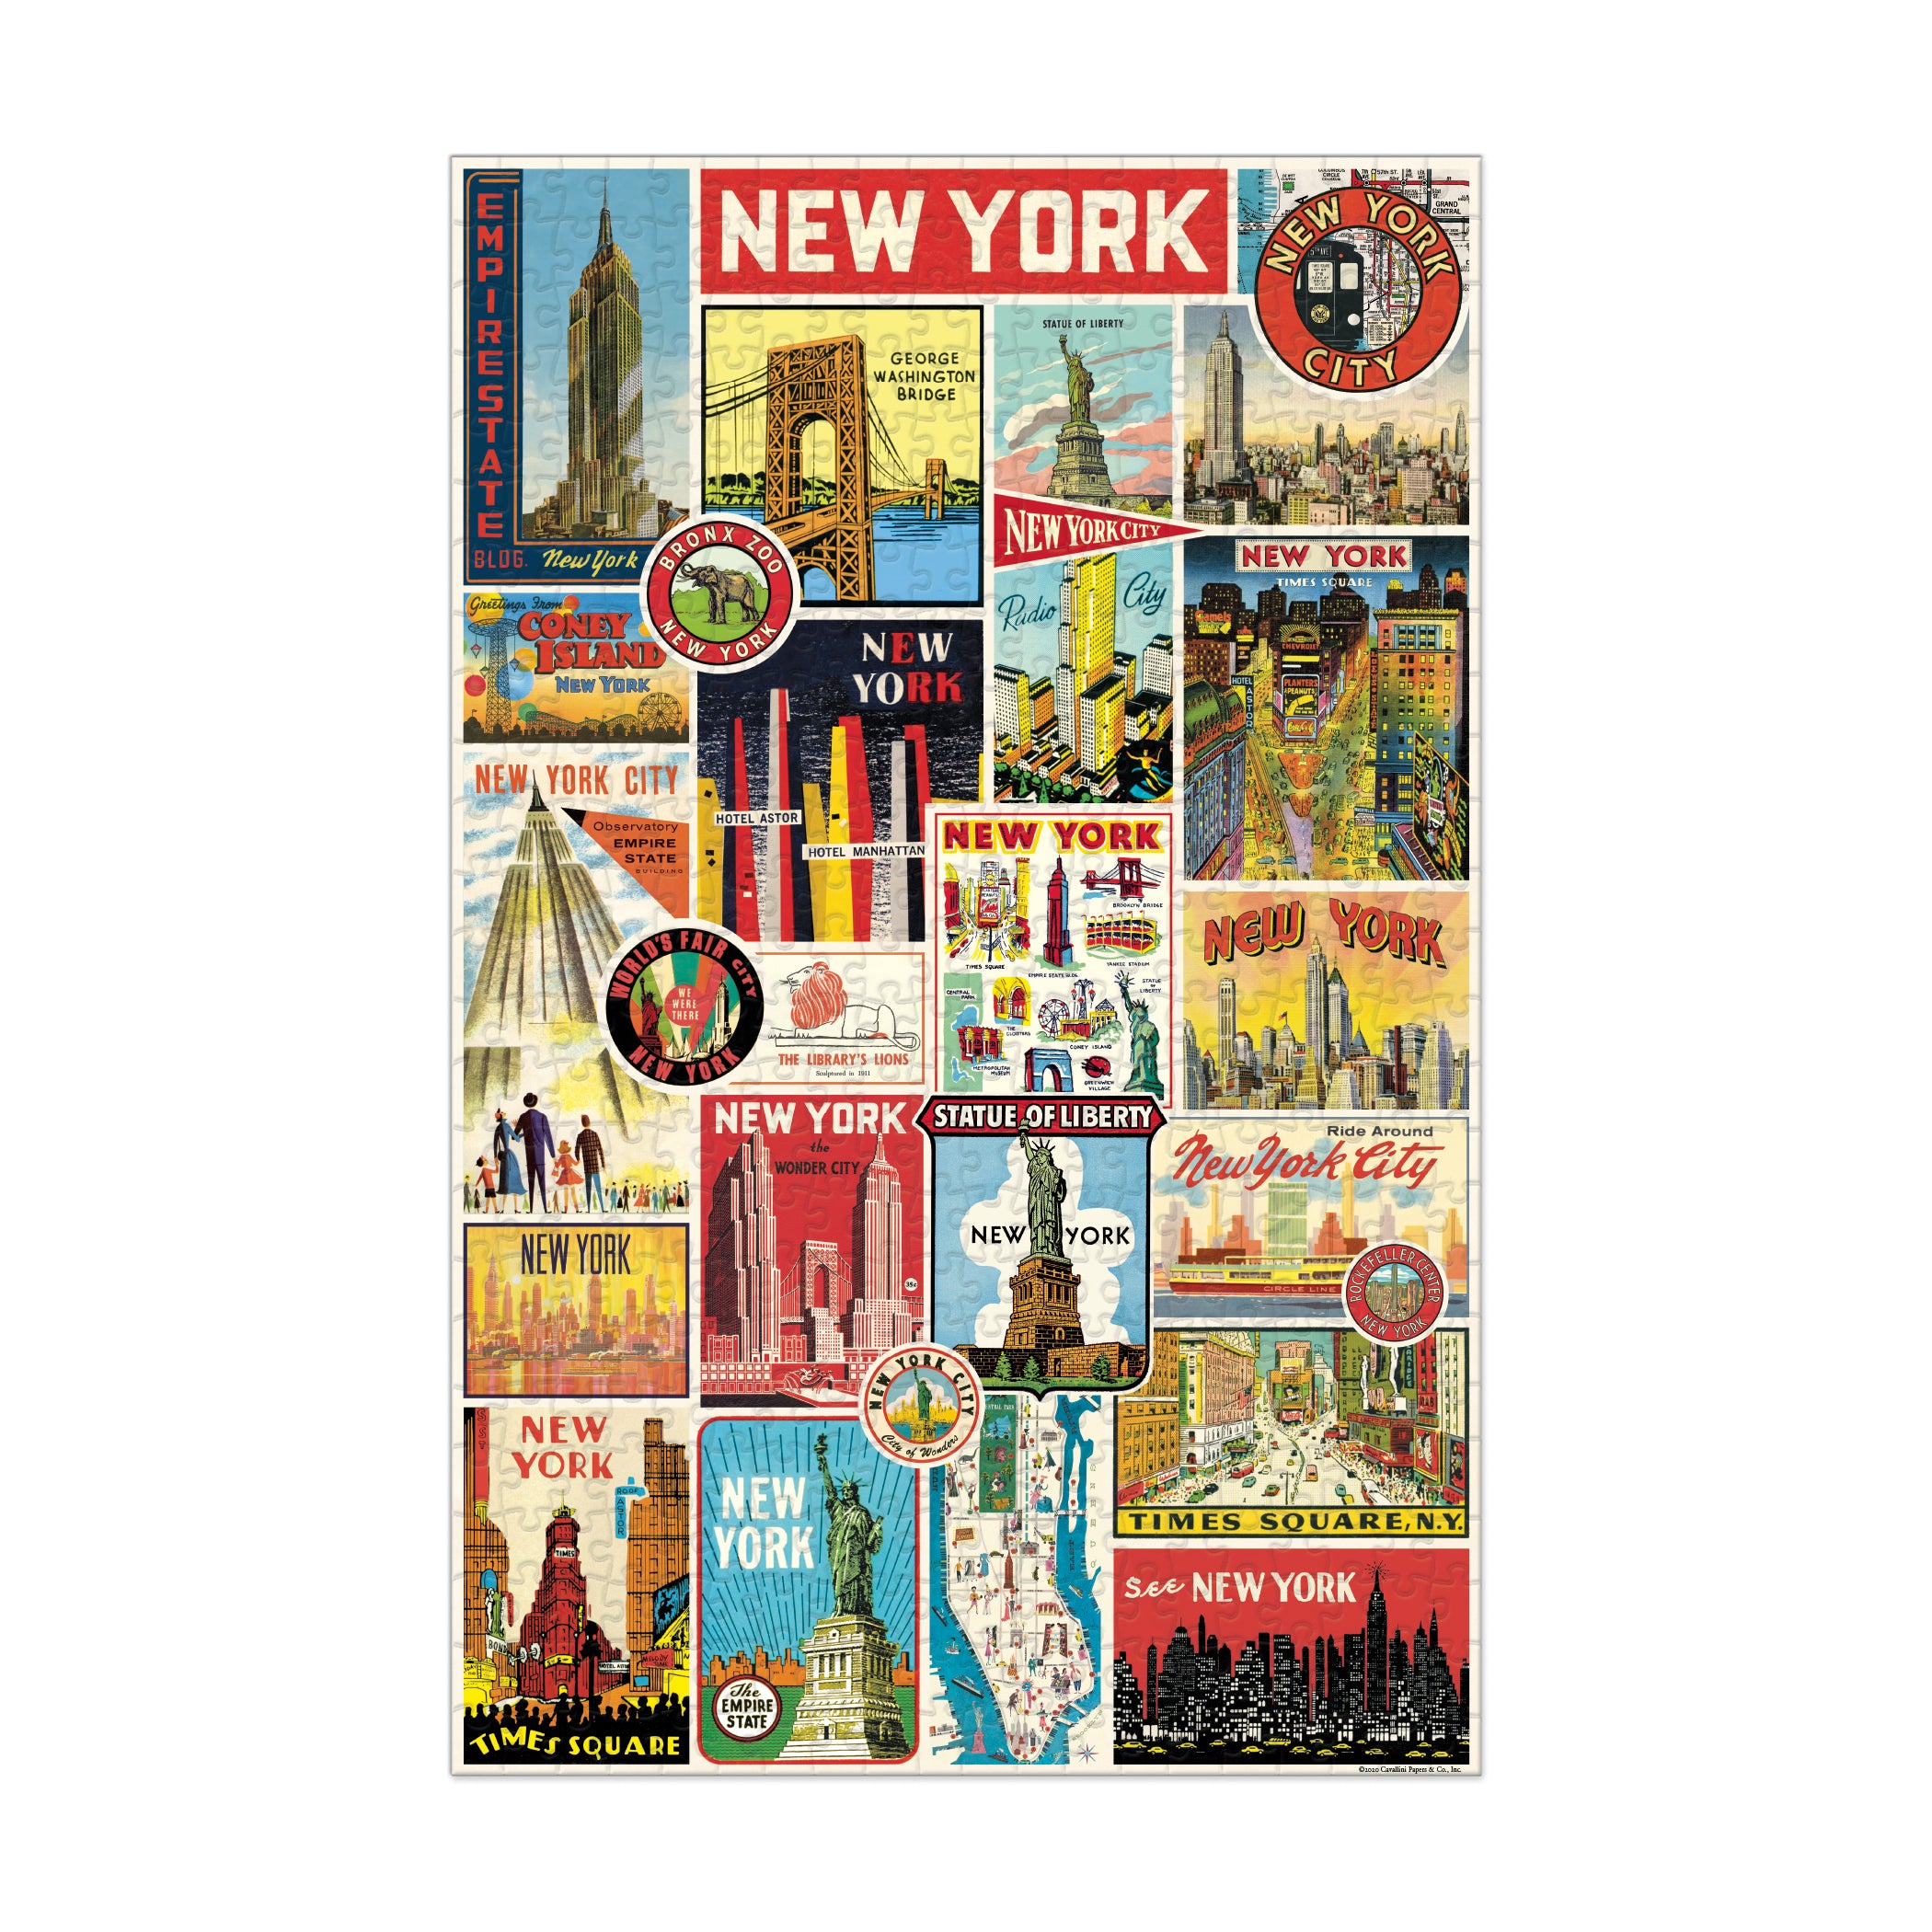 New York City Collage 500 Piece Puzzle